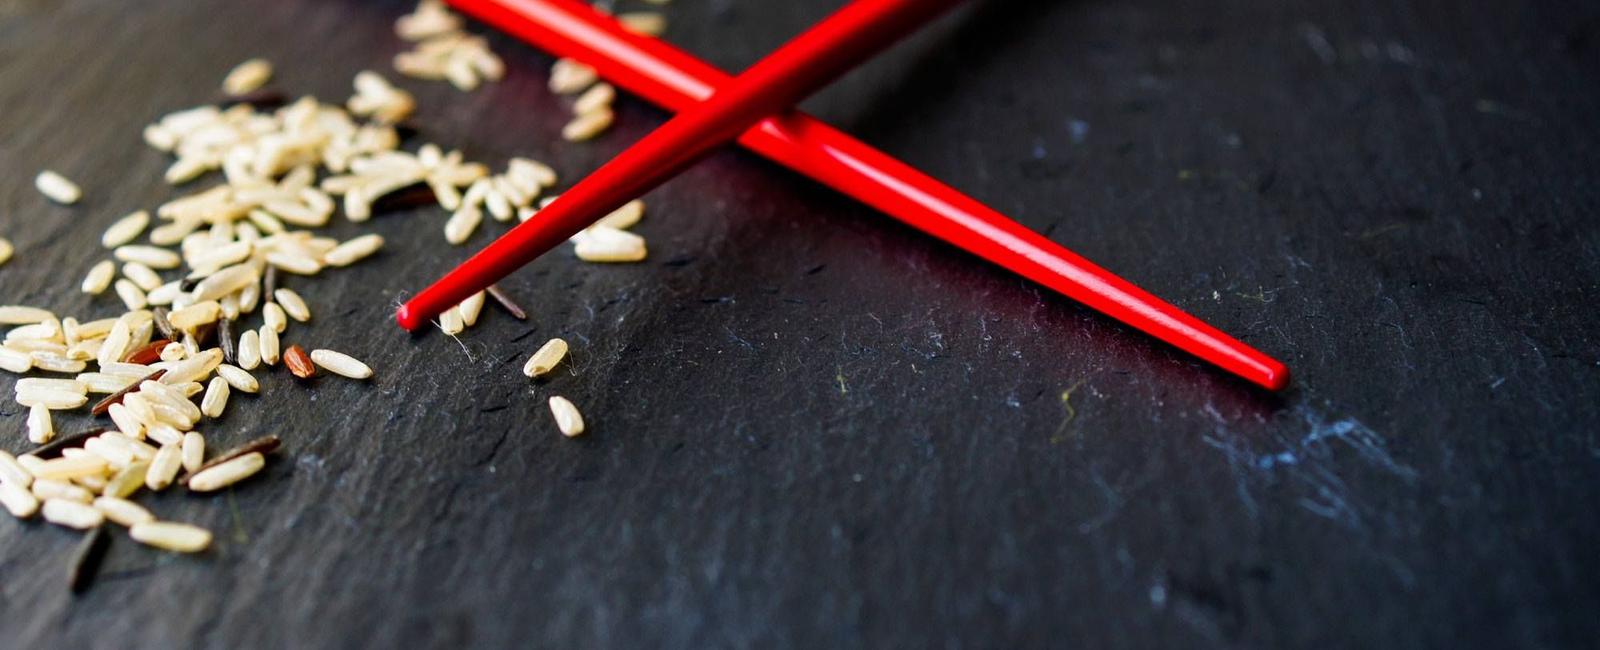 In china people use 45 billion chopsticks every year